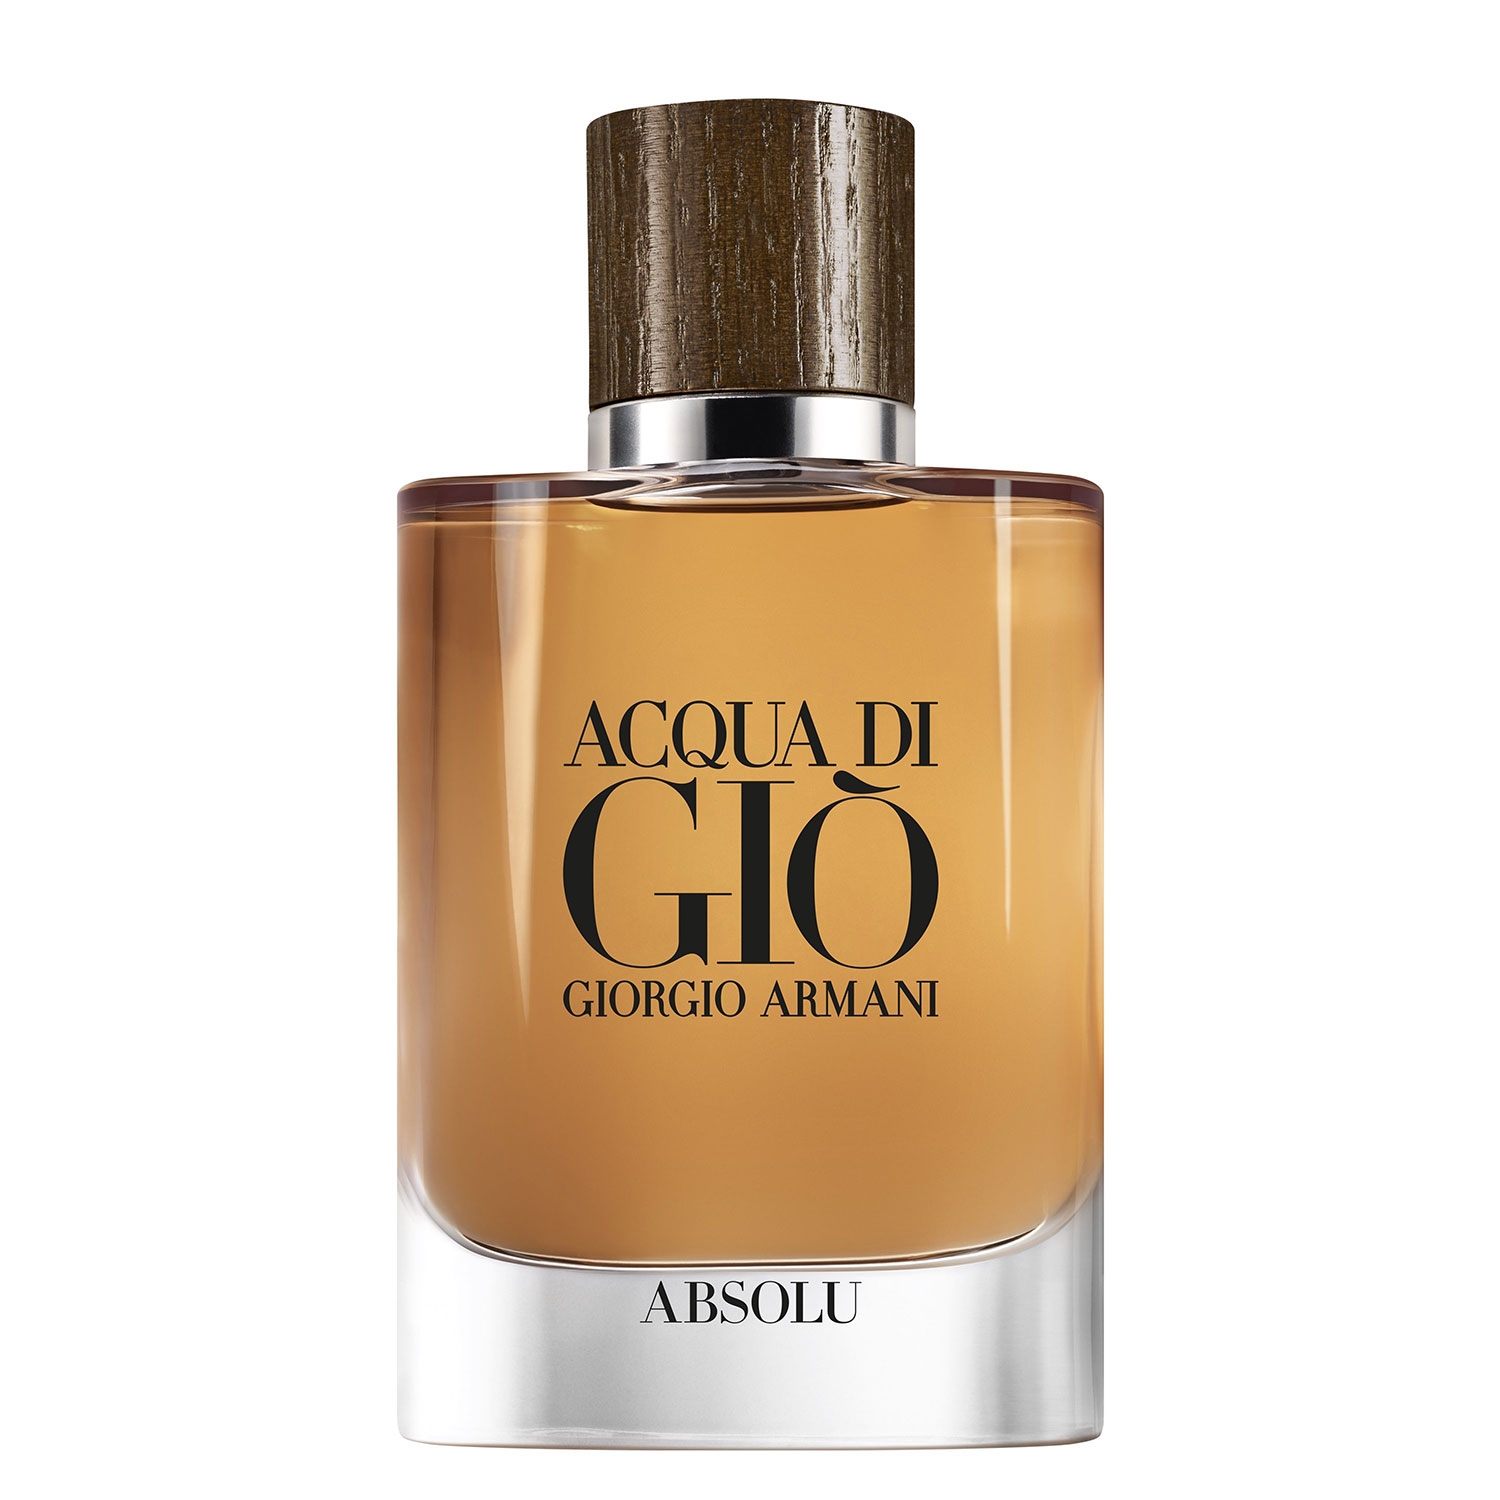 Produktbild von Acqua di Giò - Absolu Eau de Parfum